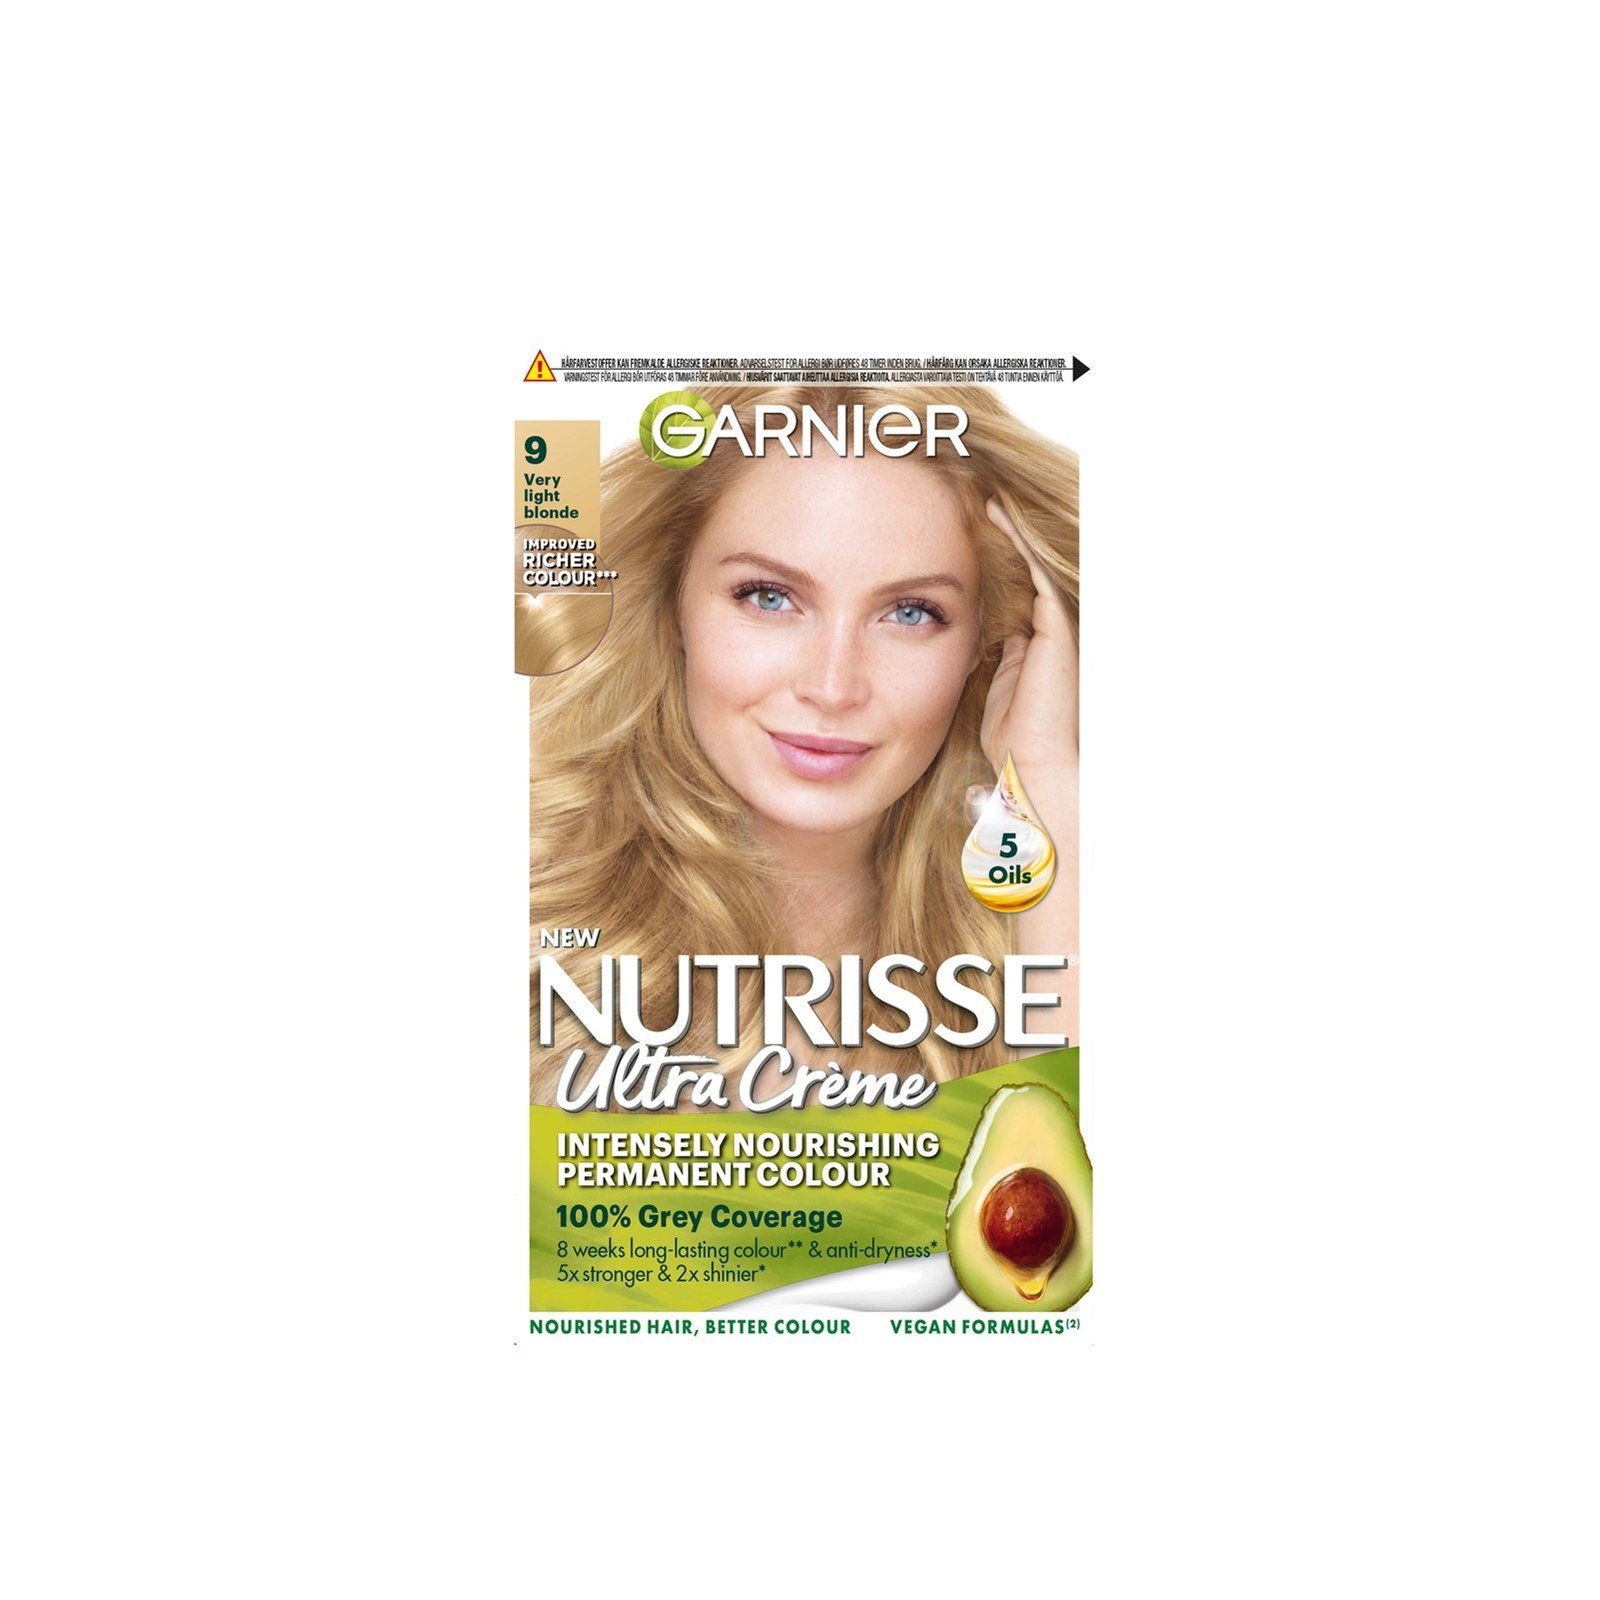 Garnier Nutrisse Ultra Crème Permanent Hair Dye 9 Very Light Blonde